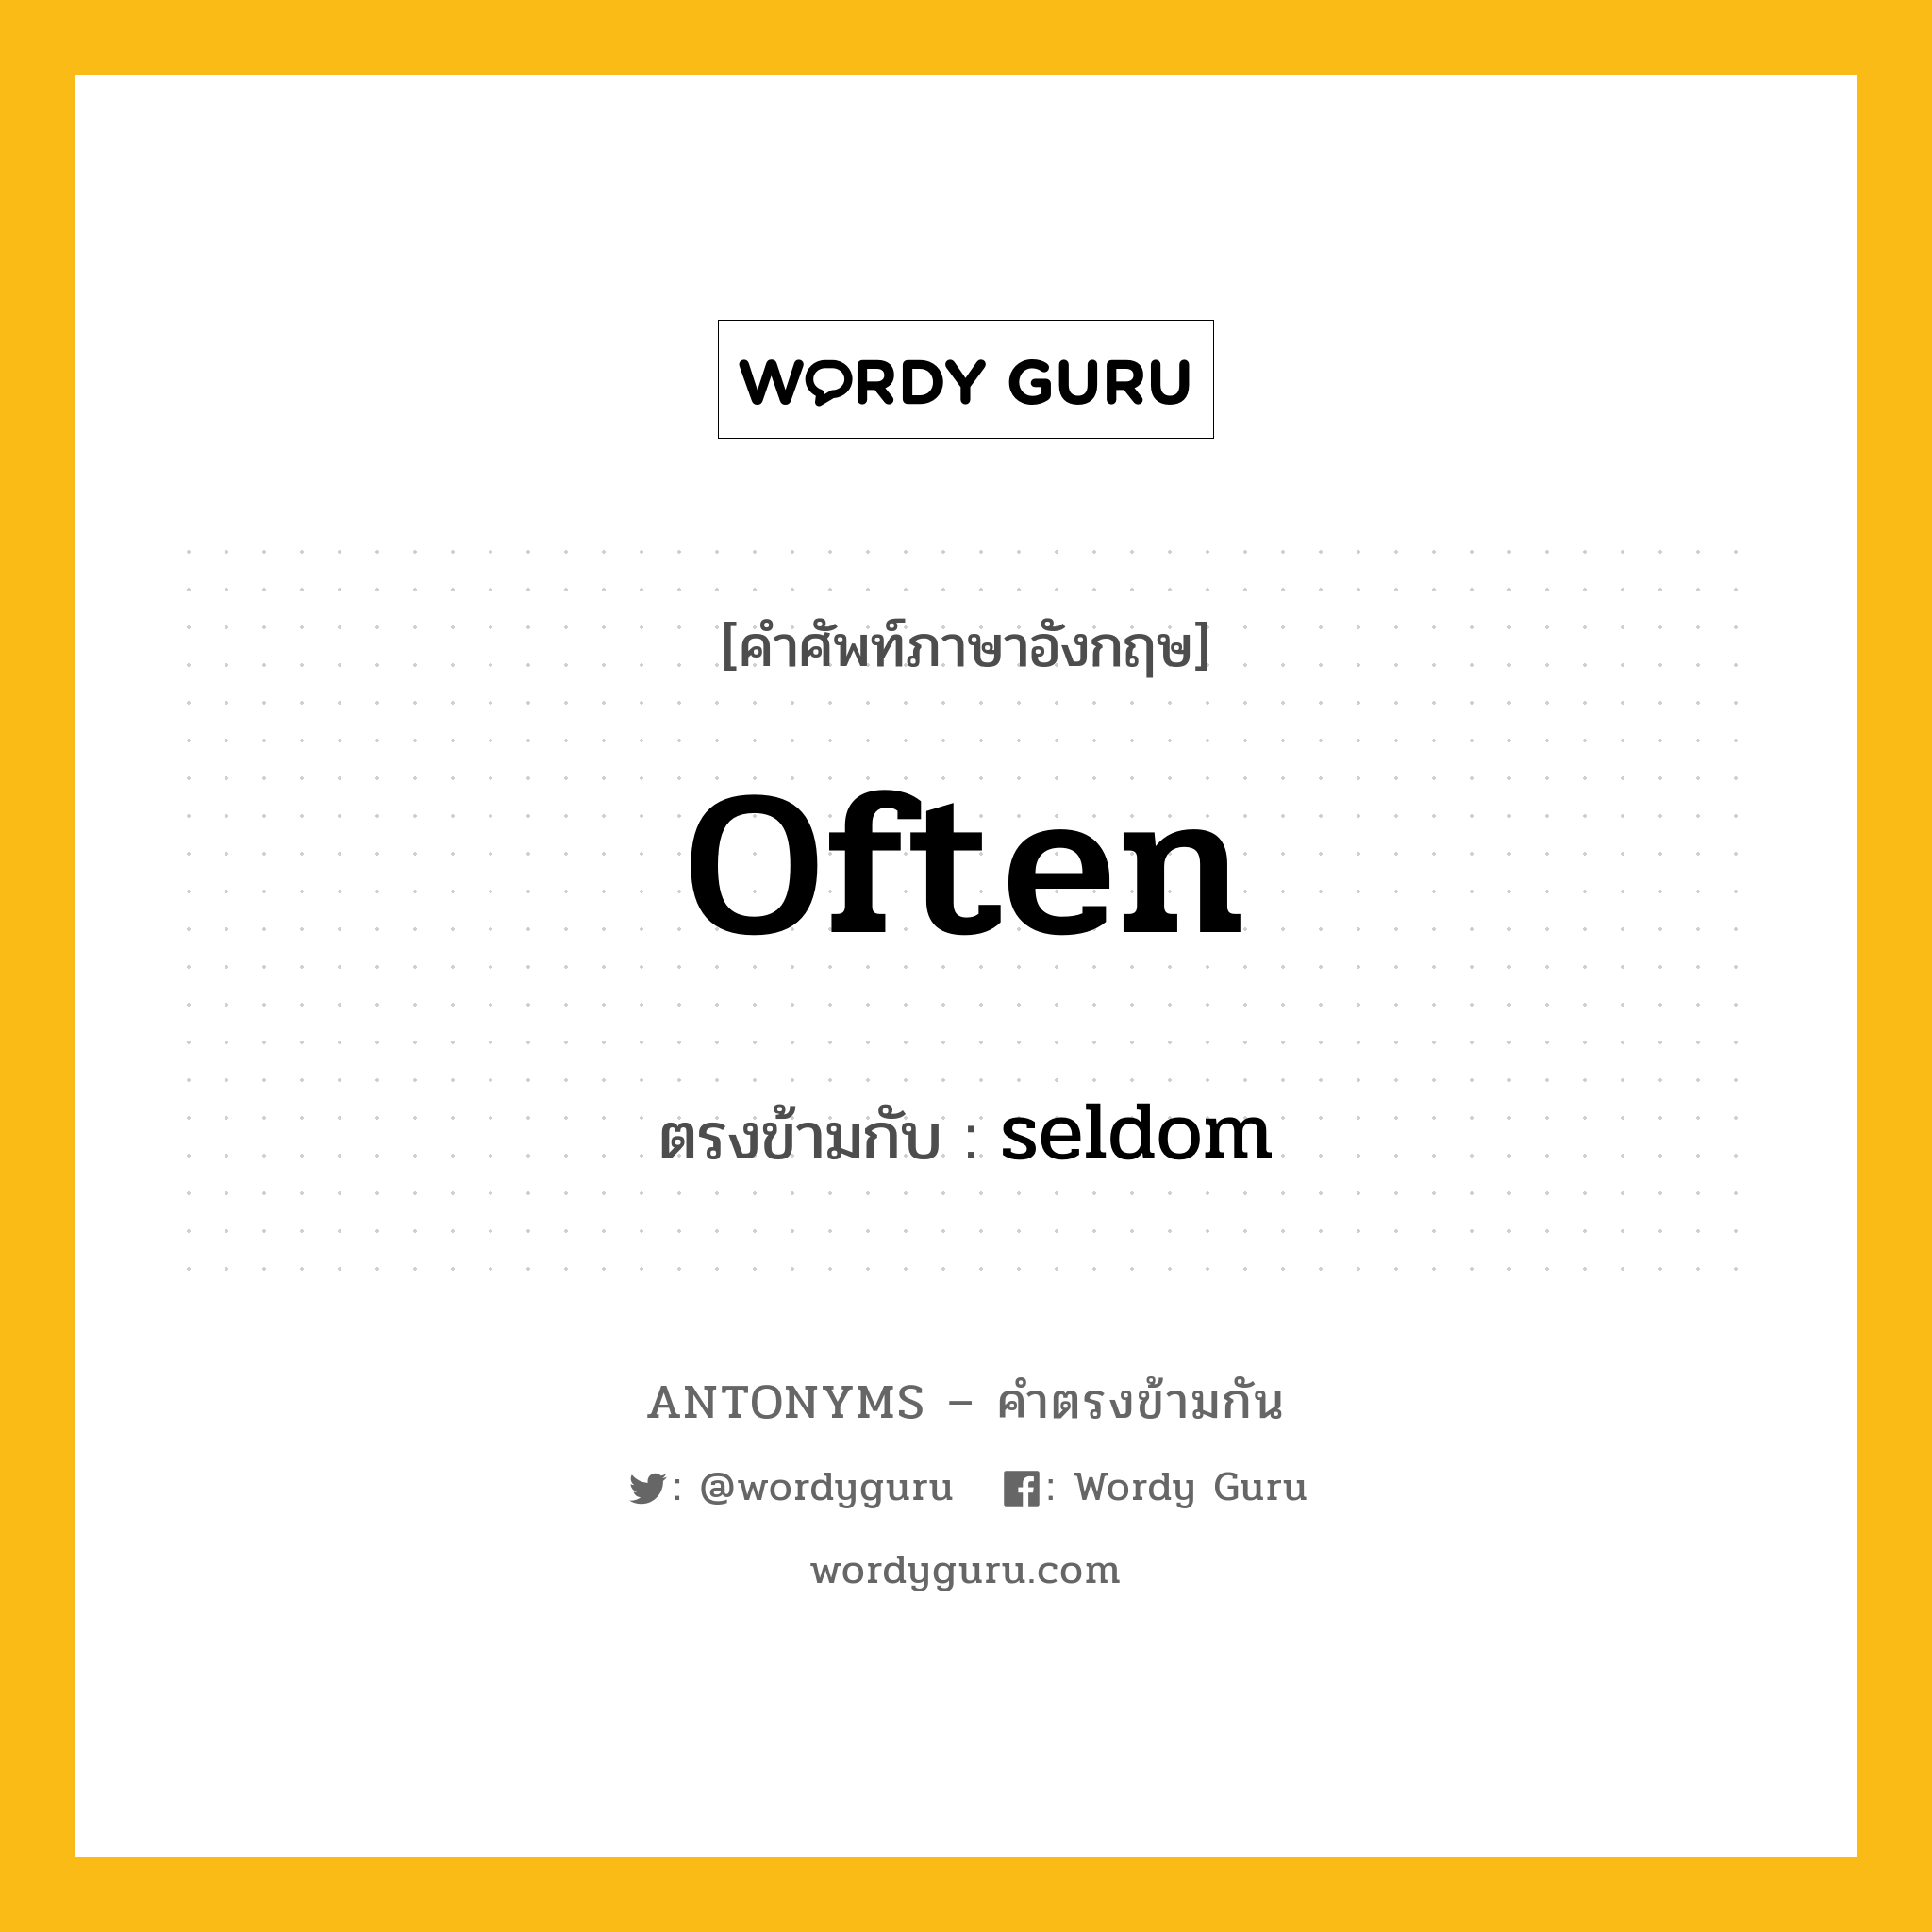 often เป็นคำตรงข้ามกับคำไหนบ้าง?, คำศัพท์ภาษาอังกฤษ often ตรงข้ามกับ seldom หมวด seldom